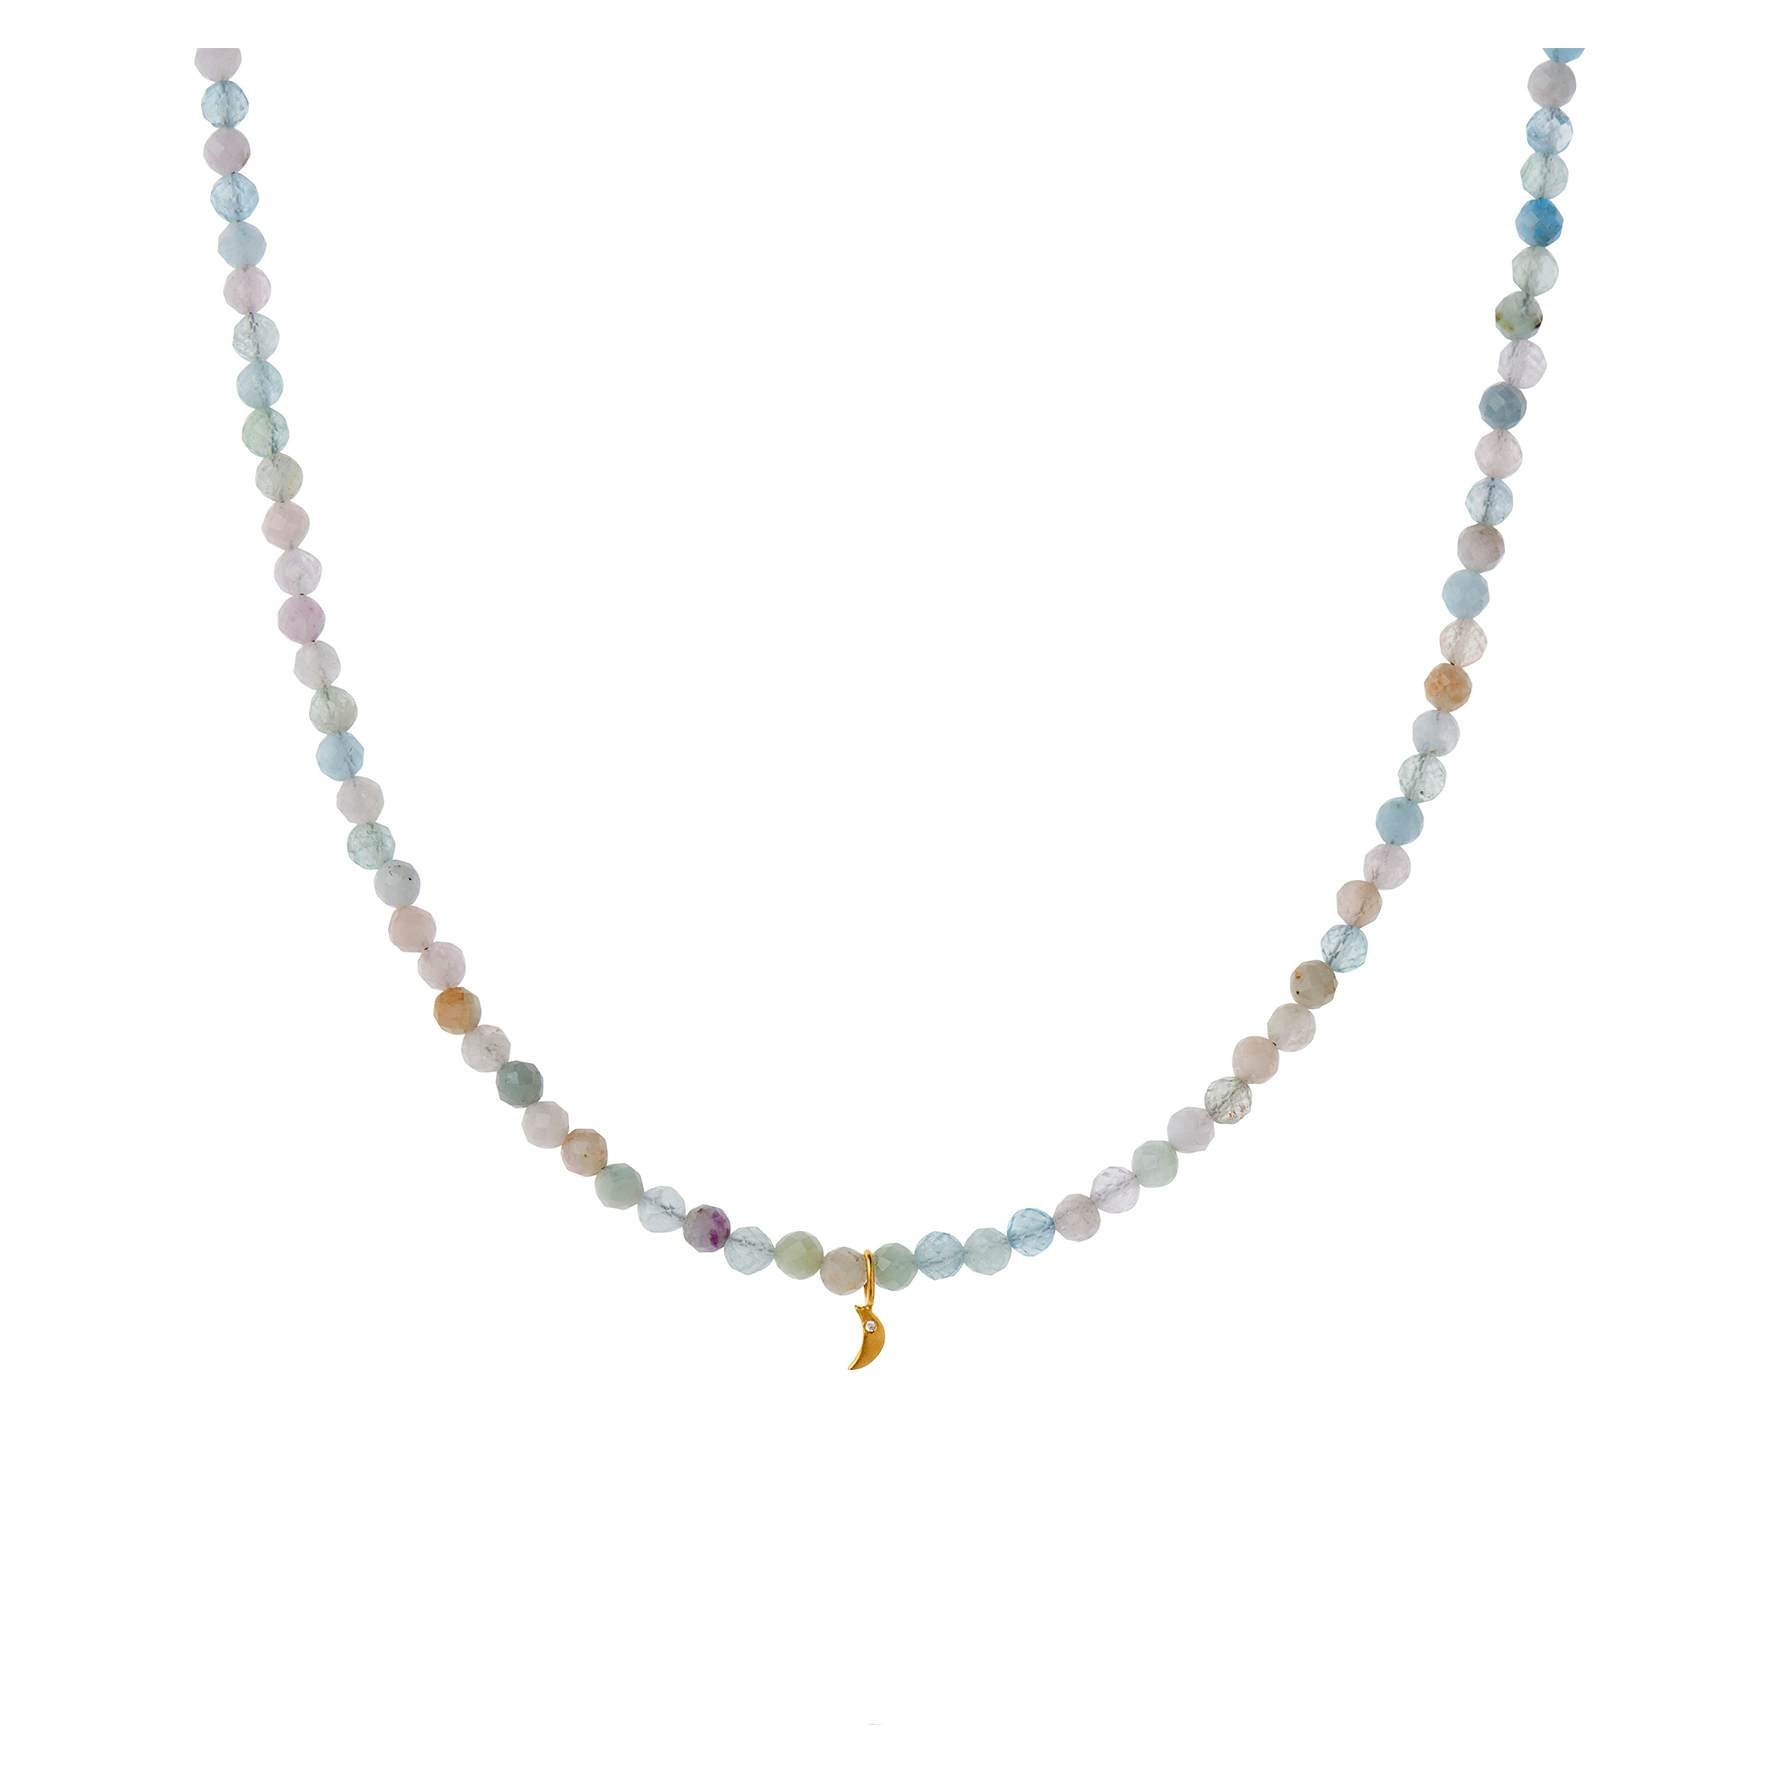 Soft Pastella With Tres Patit Moon Necklace von STINE A Jewelry in Vergoldet-Silber Sterling 925